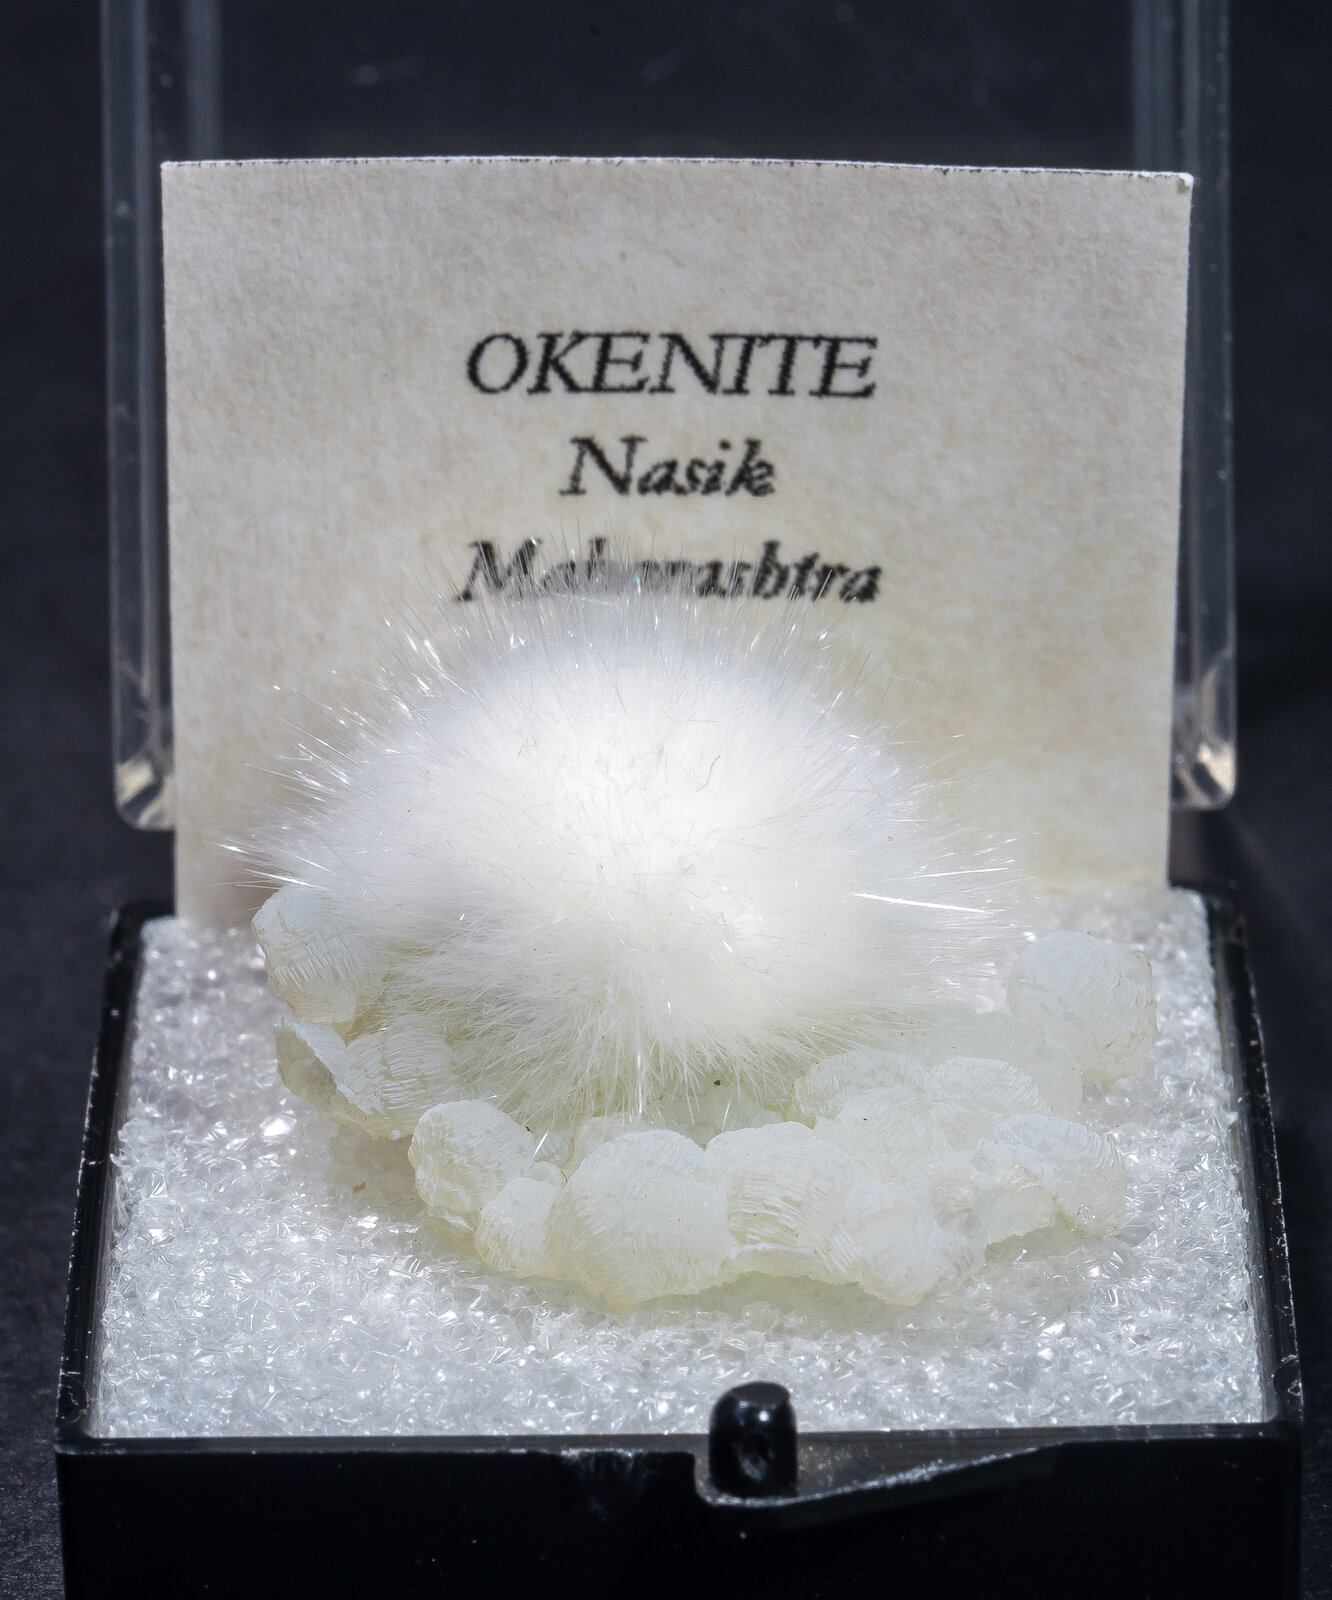 specimens/s_imagesAM9/Okenite-MB10AM9f1.jpg